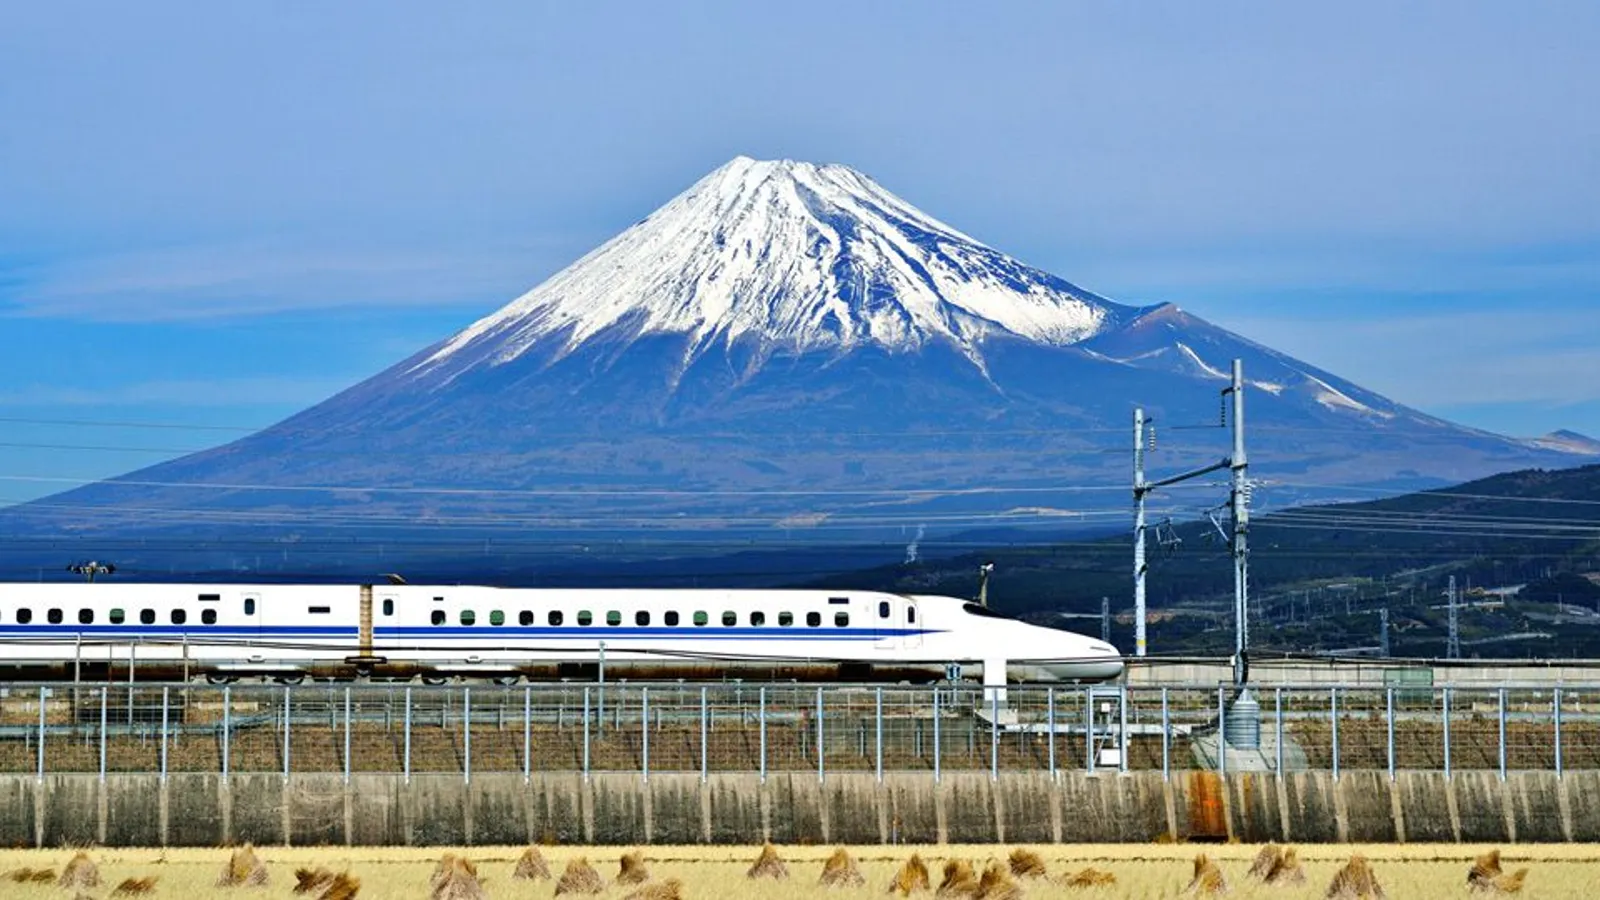 Train Passing Mt. Fuji in Japan, photo by Sean Pavone/Alamy